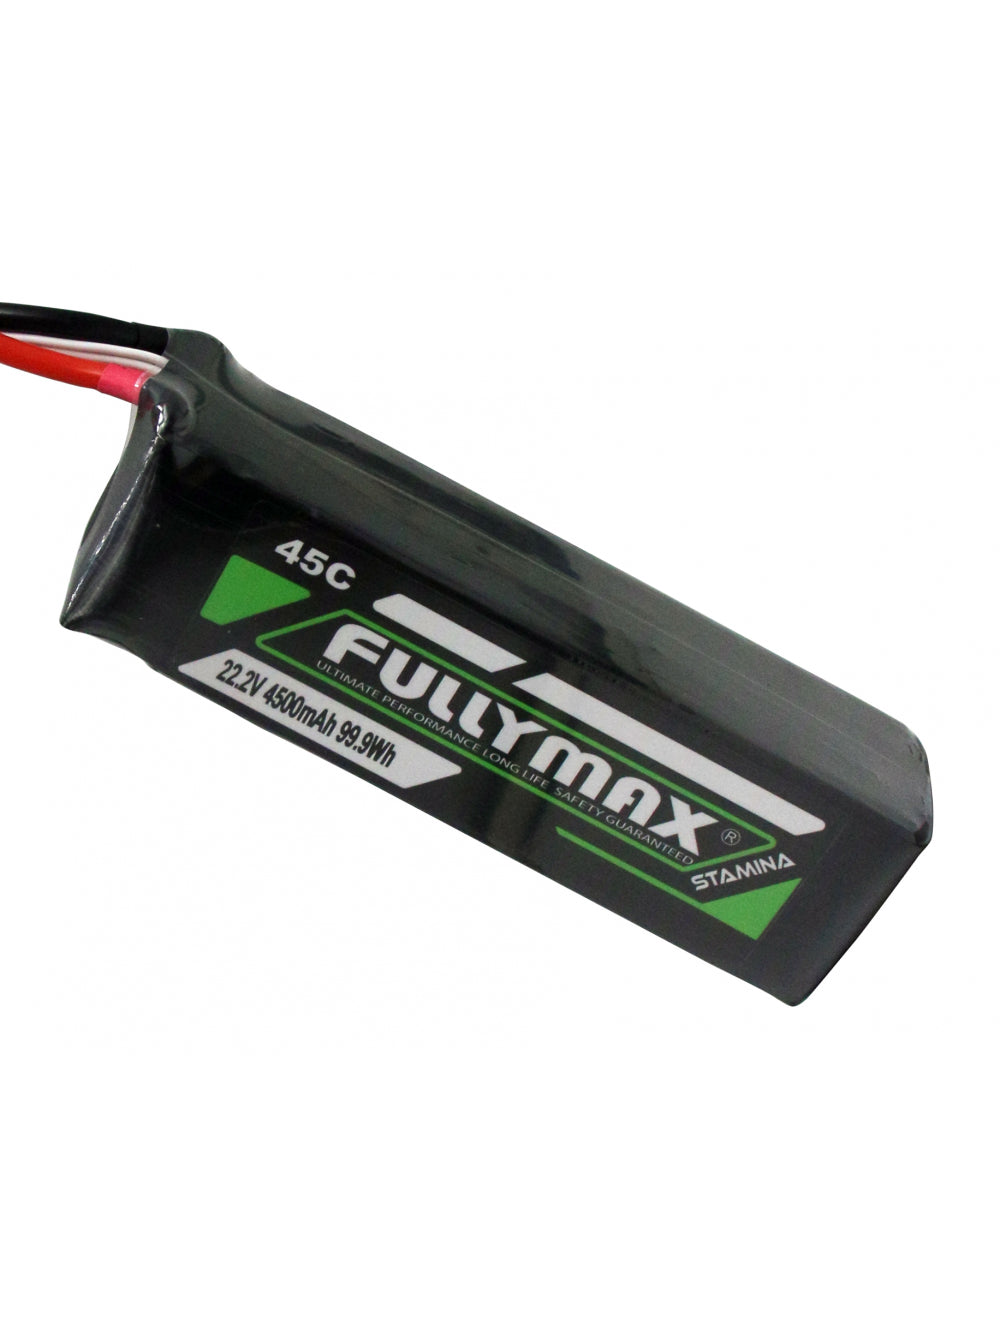 Overlander Fullymax 4500mAh 22.2V 6S 45C LiPo Battery - No Connector 3446